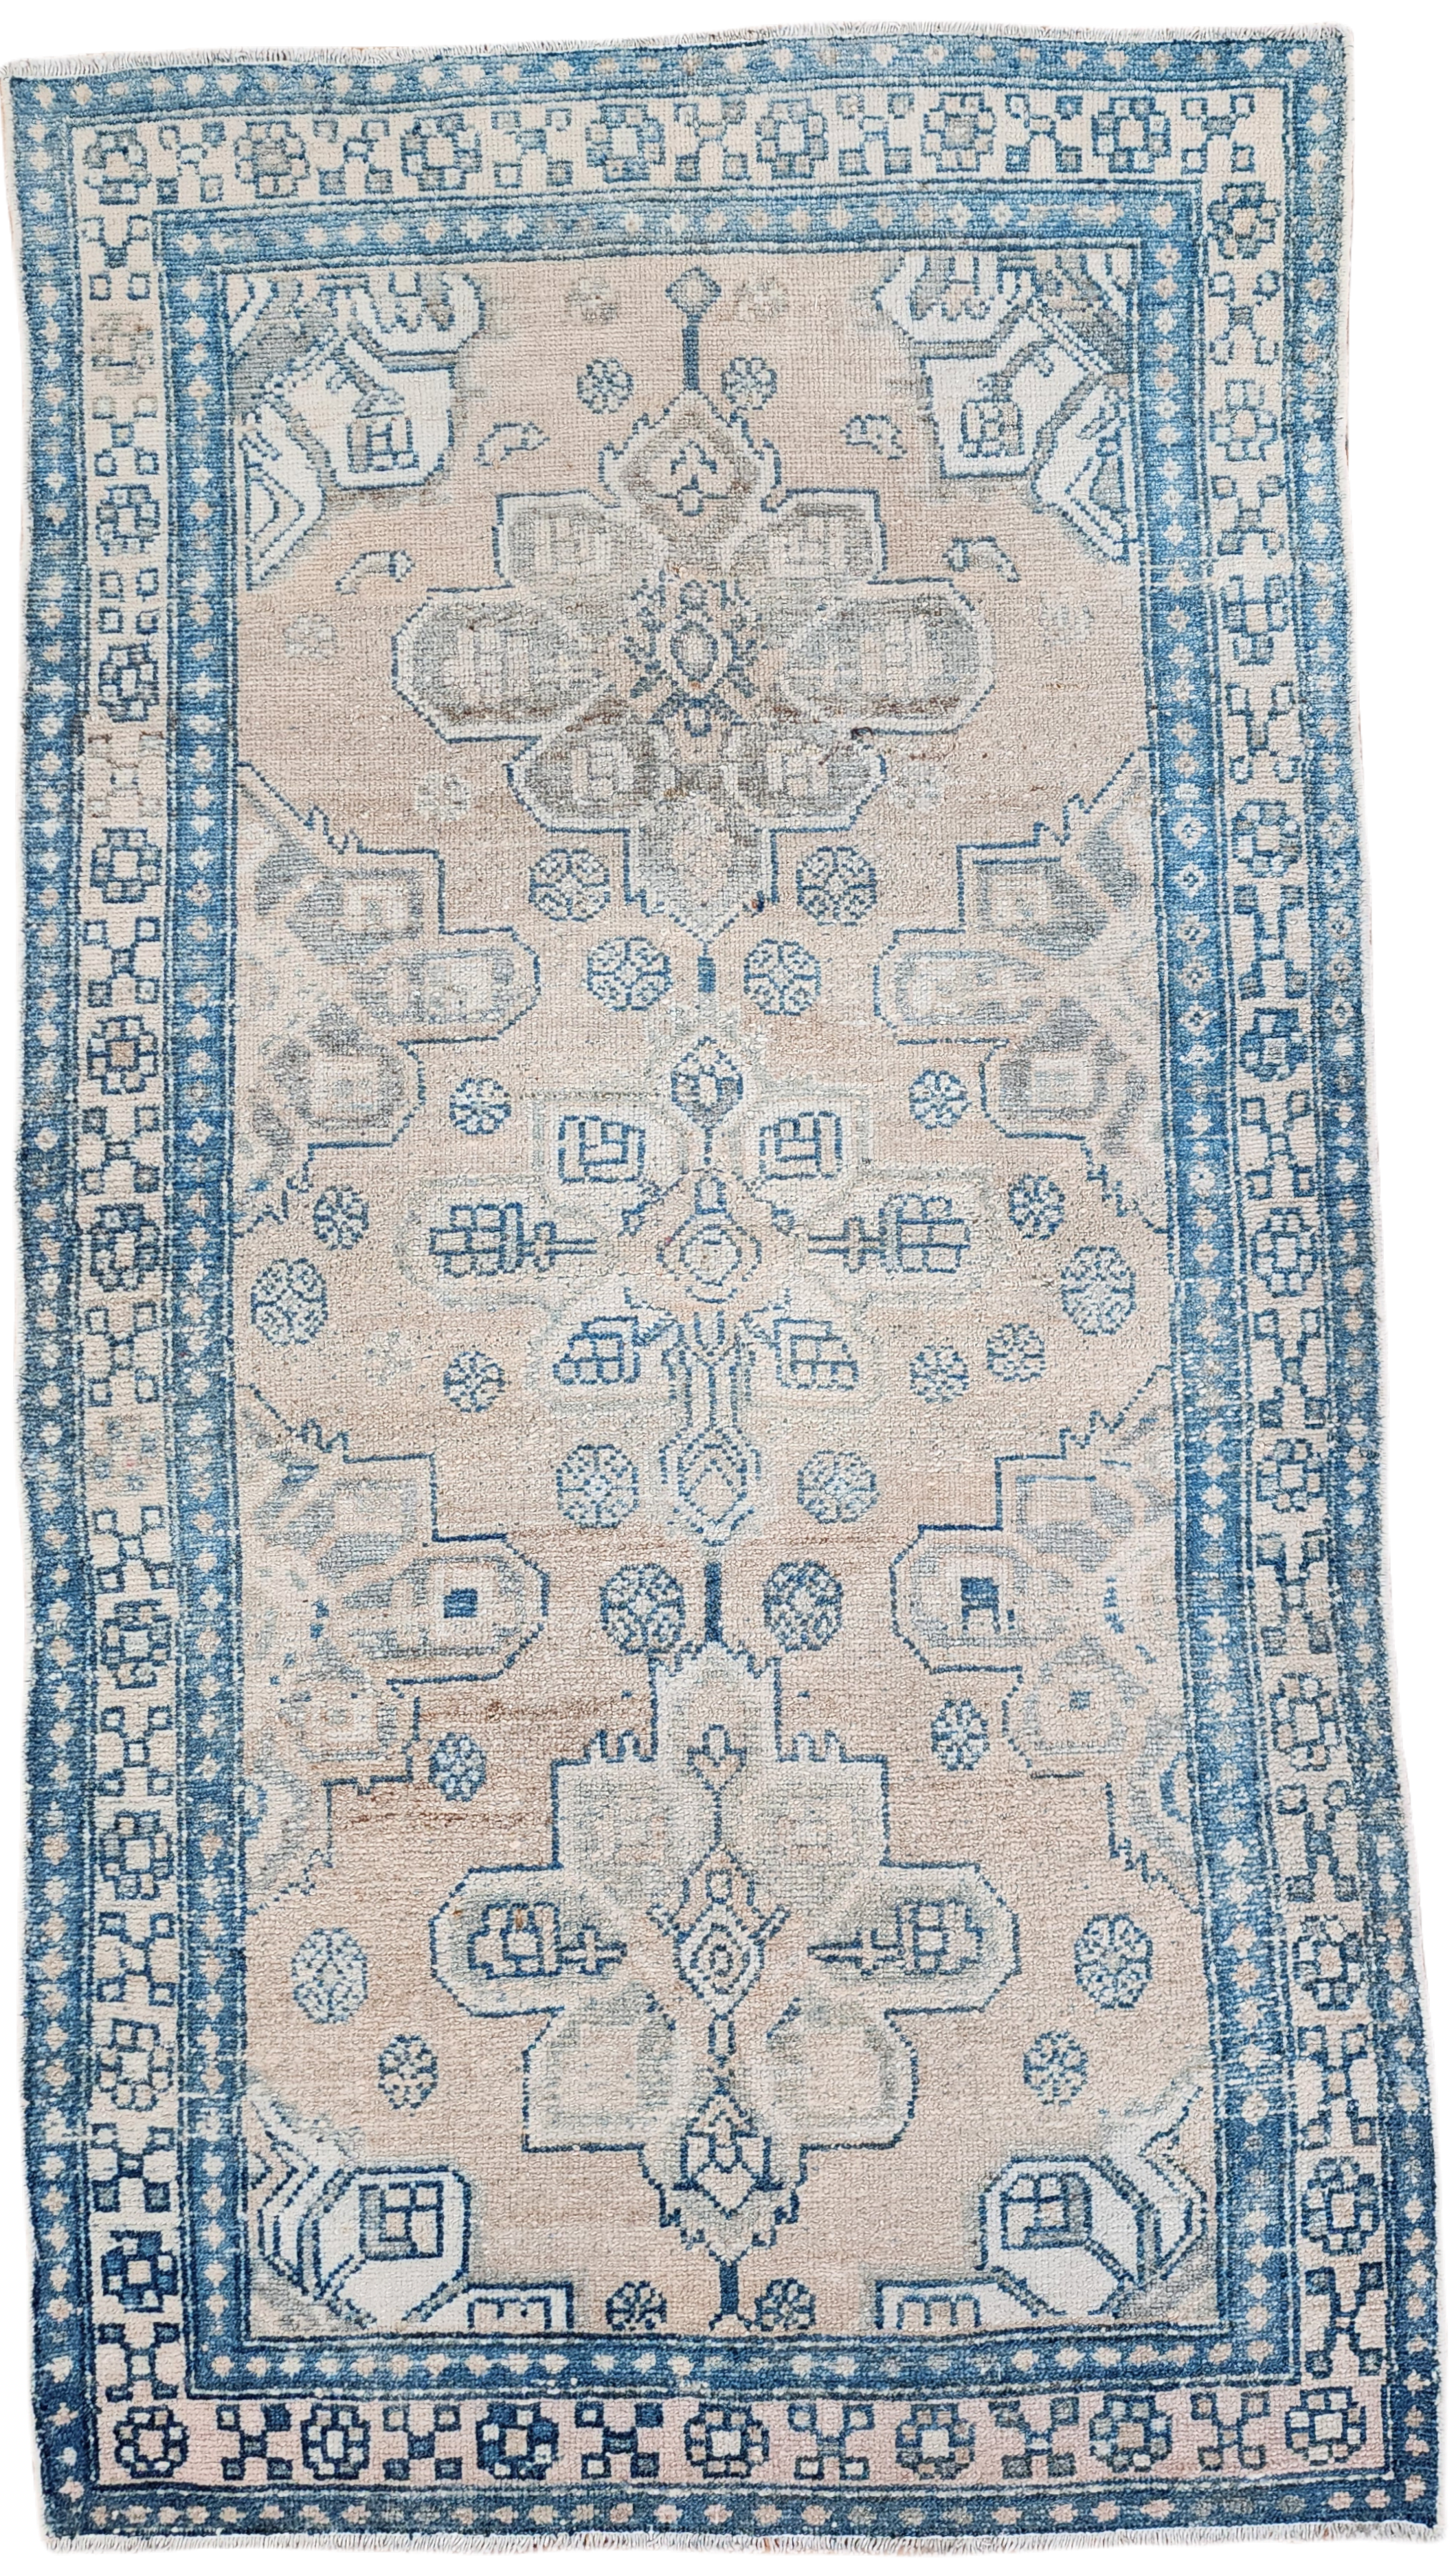 Persian Vintage Rug 5 x 3 ft Beige and Blue Natural Wool Vintage Turkish Rug for Boho Retro Living or Dining Room Decor, Persian Rug, Carpet